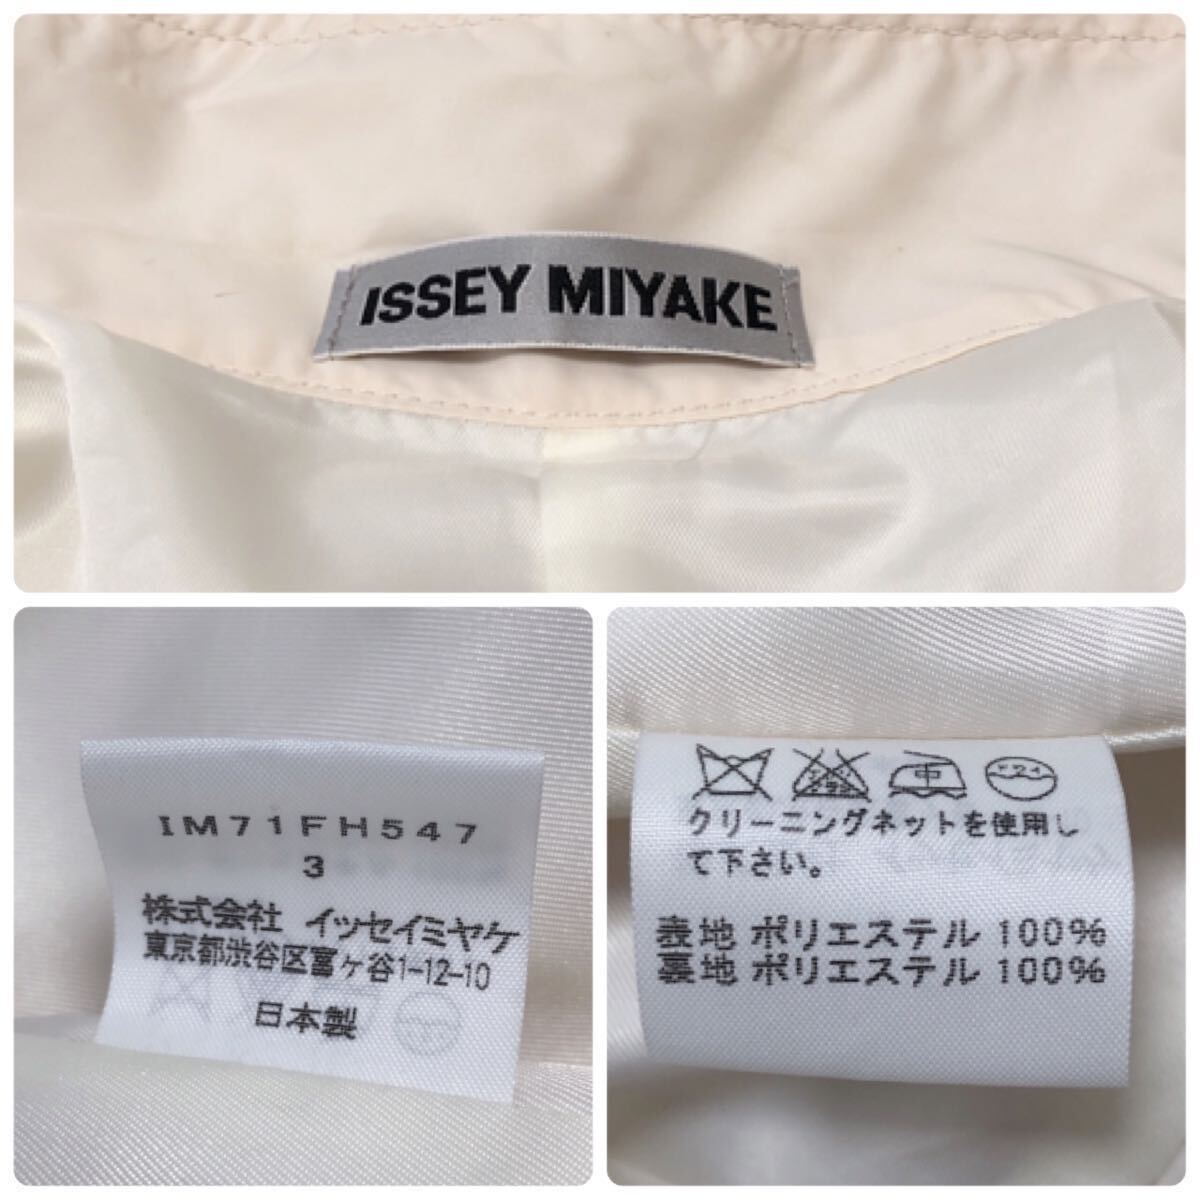  rare *ISSEY MIYAKE Issey Miyake One-piece no sleeve nylon pocket IM71FH547 size 3 ivory series archive 